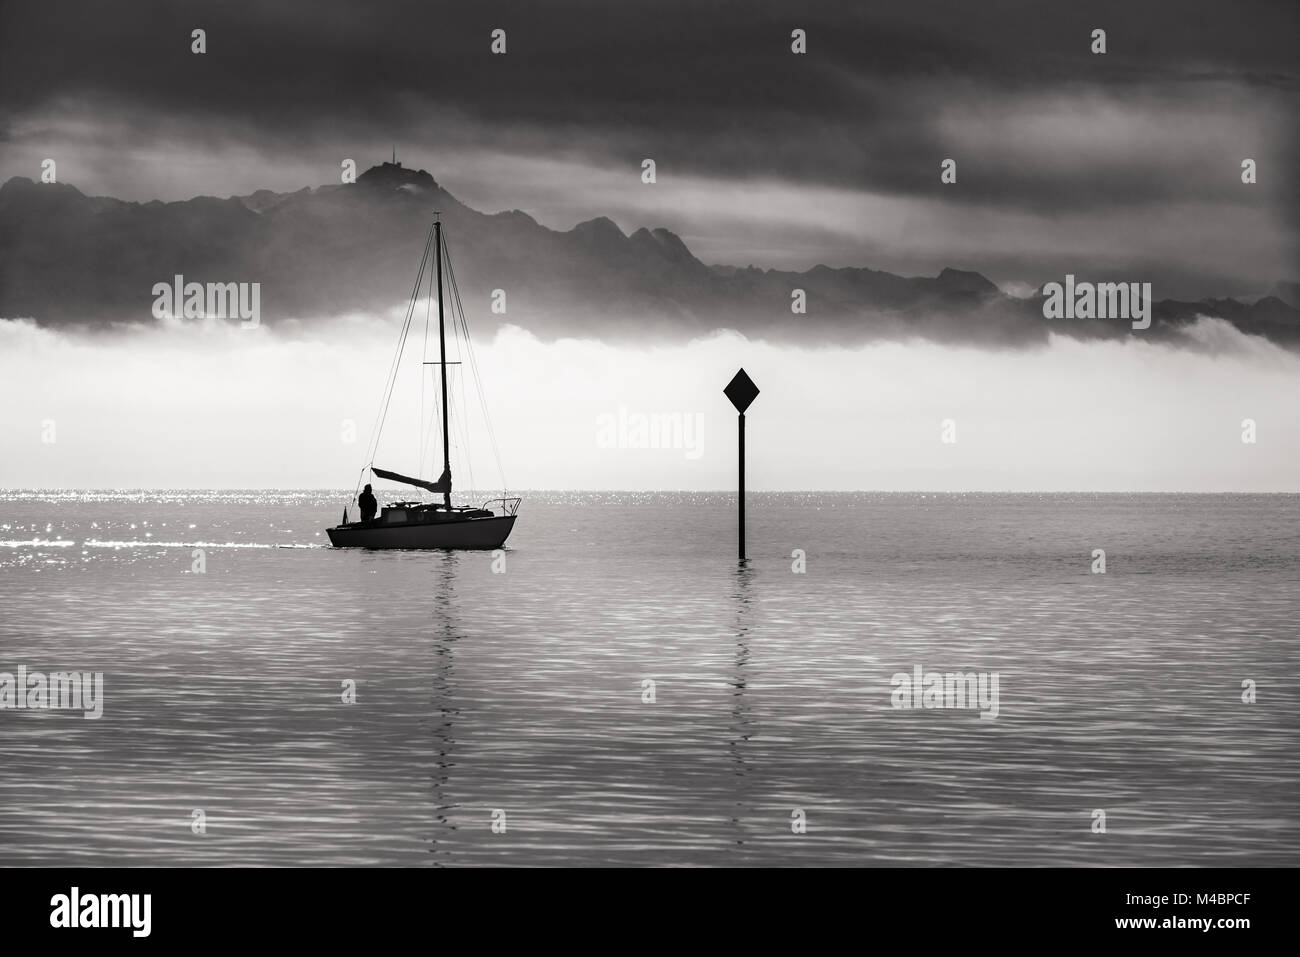 Monochrome image of a single boat sailing Stock Photo